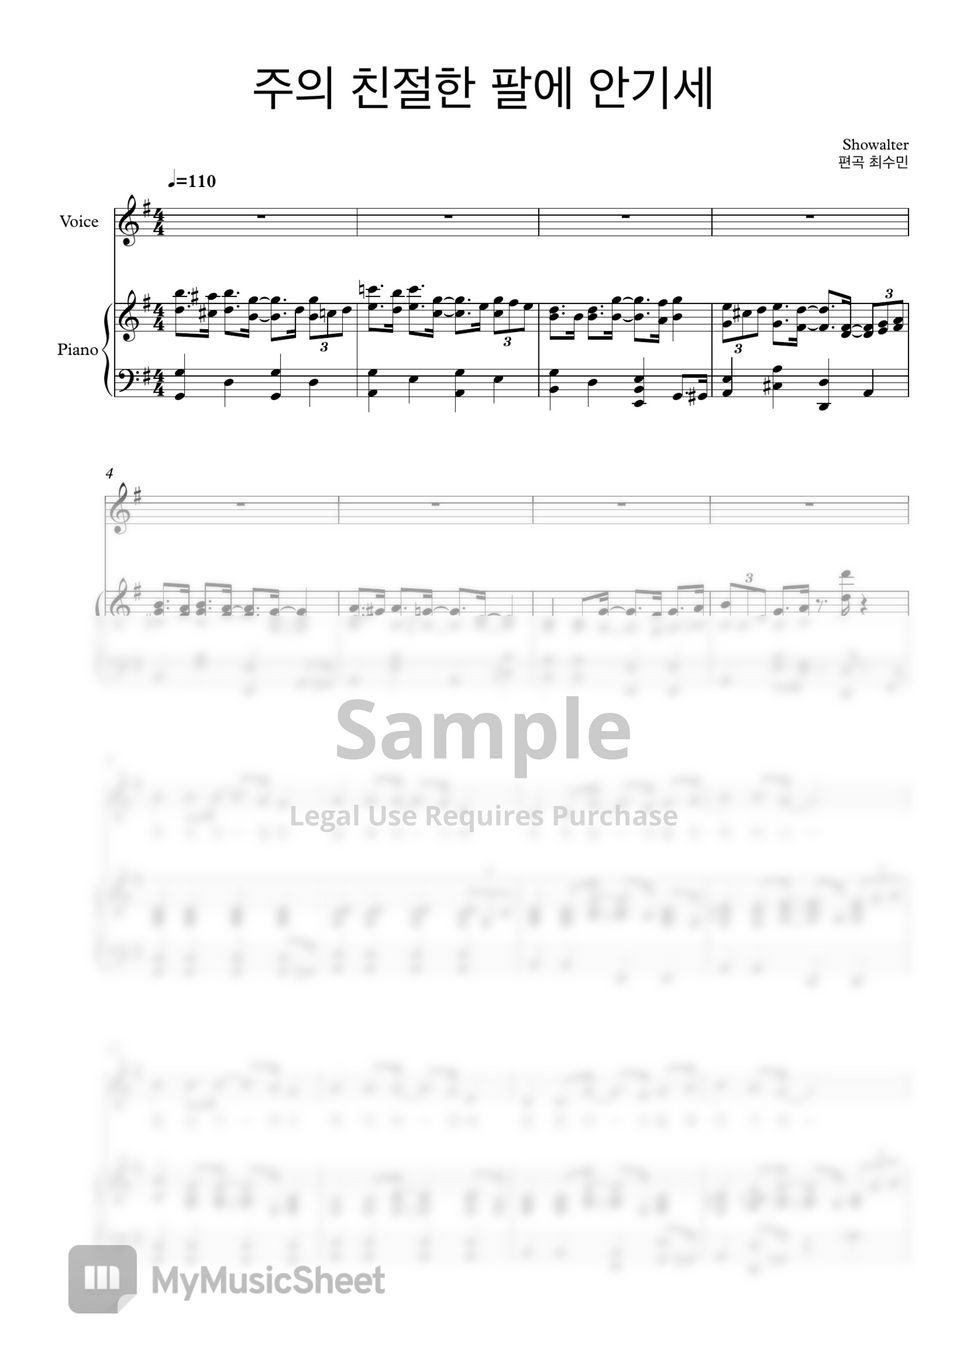 Showalter - 주의친절한팔에안기세(특송, 특주) (쉬운성가, 피아노반주) by 최수민